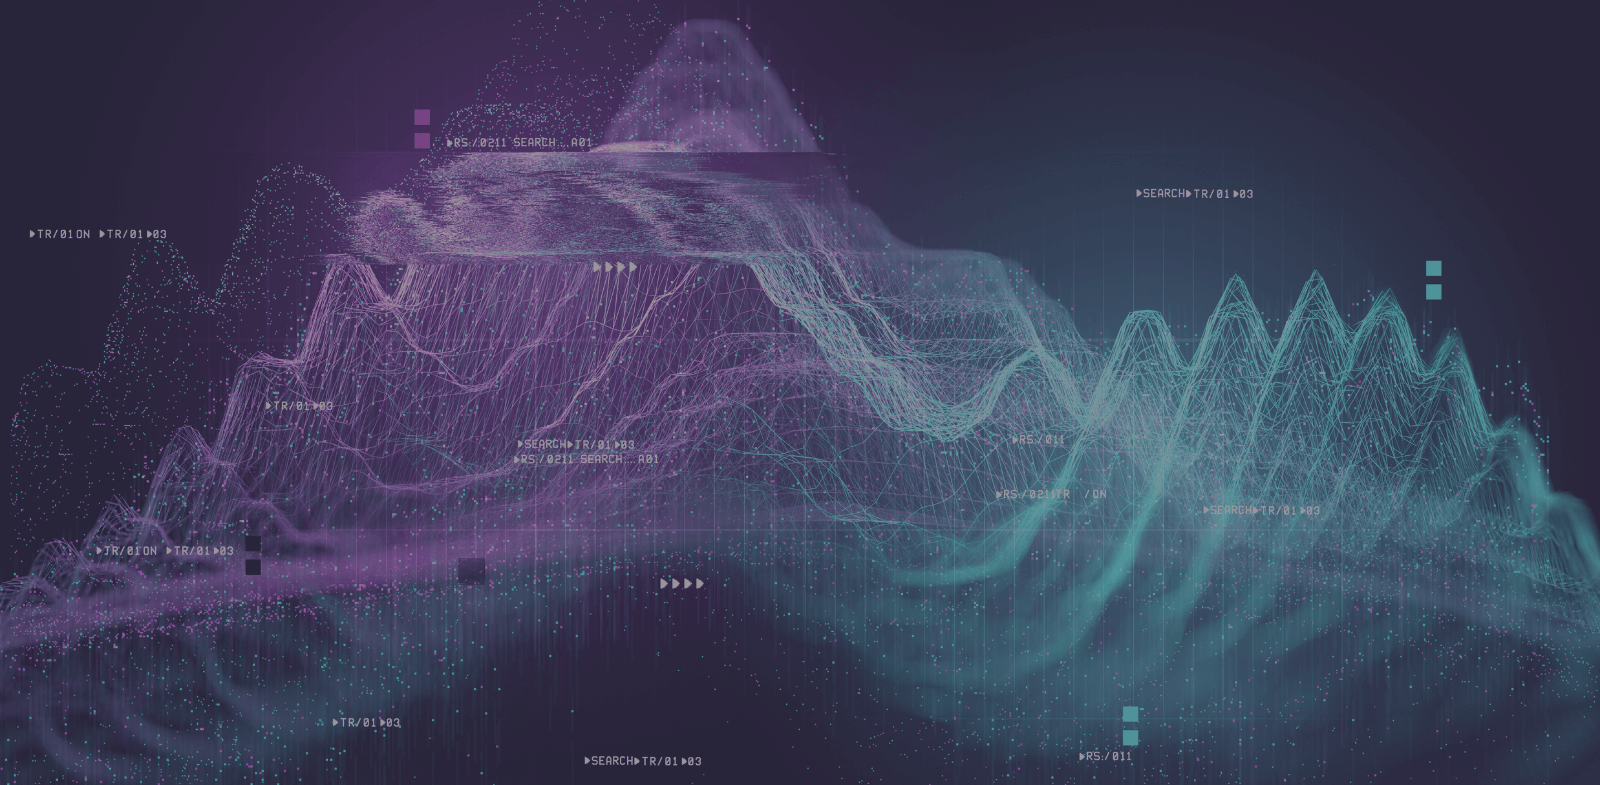 Visualisation of data information